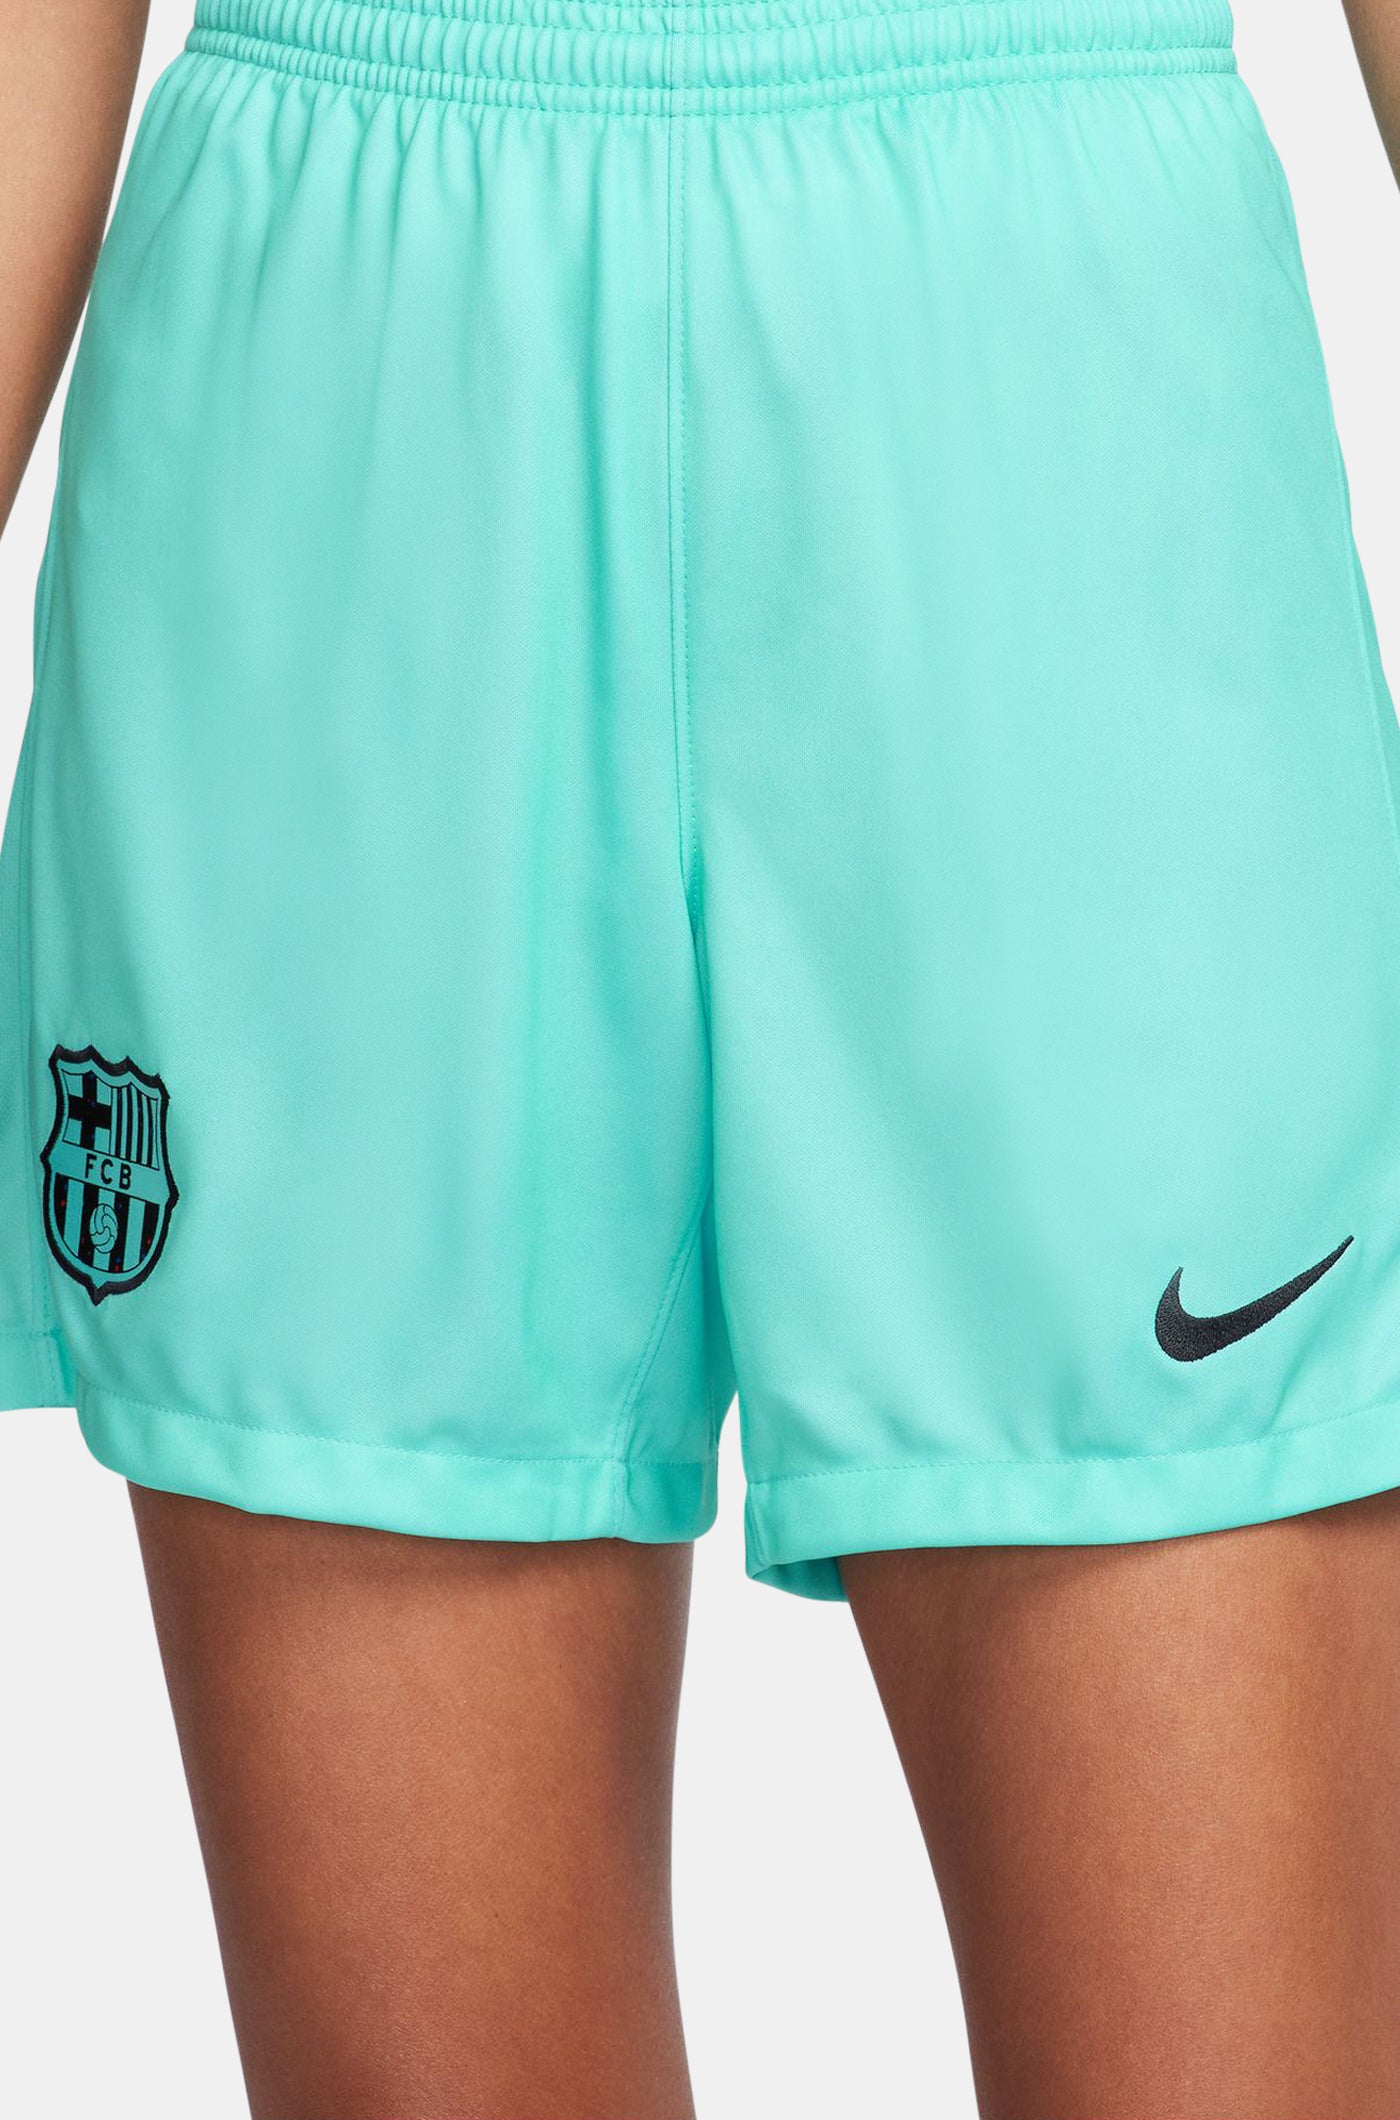 FC Barcelona third shorts 23/24 – Women